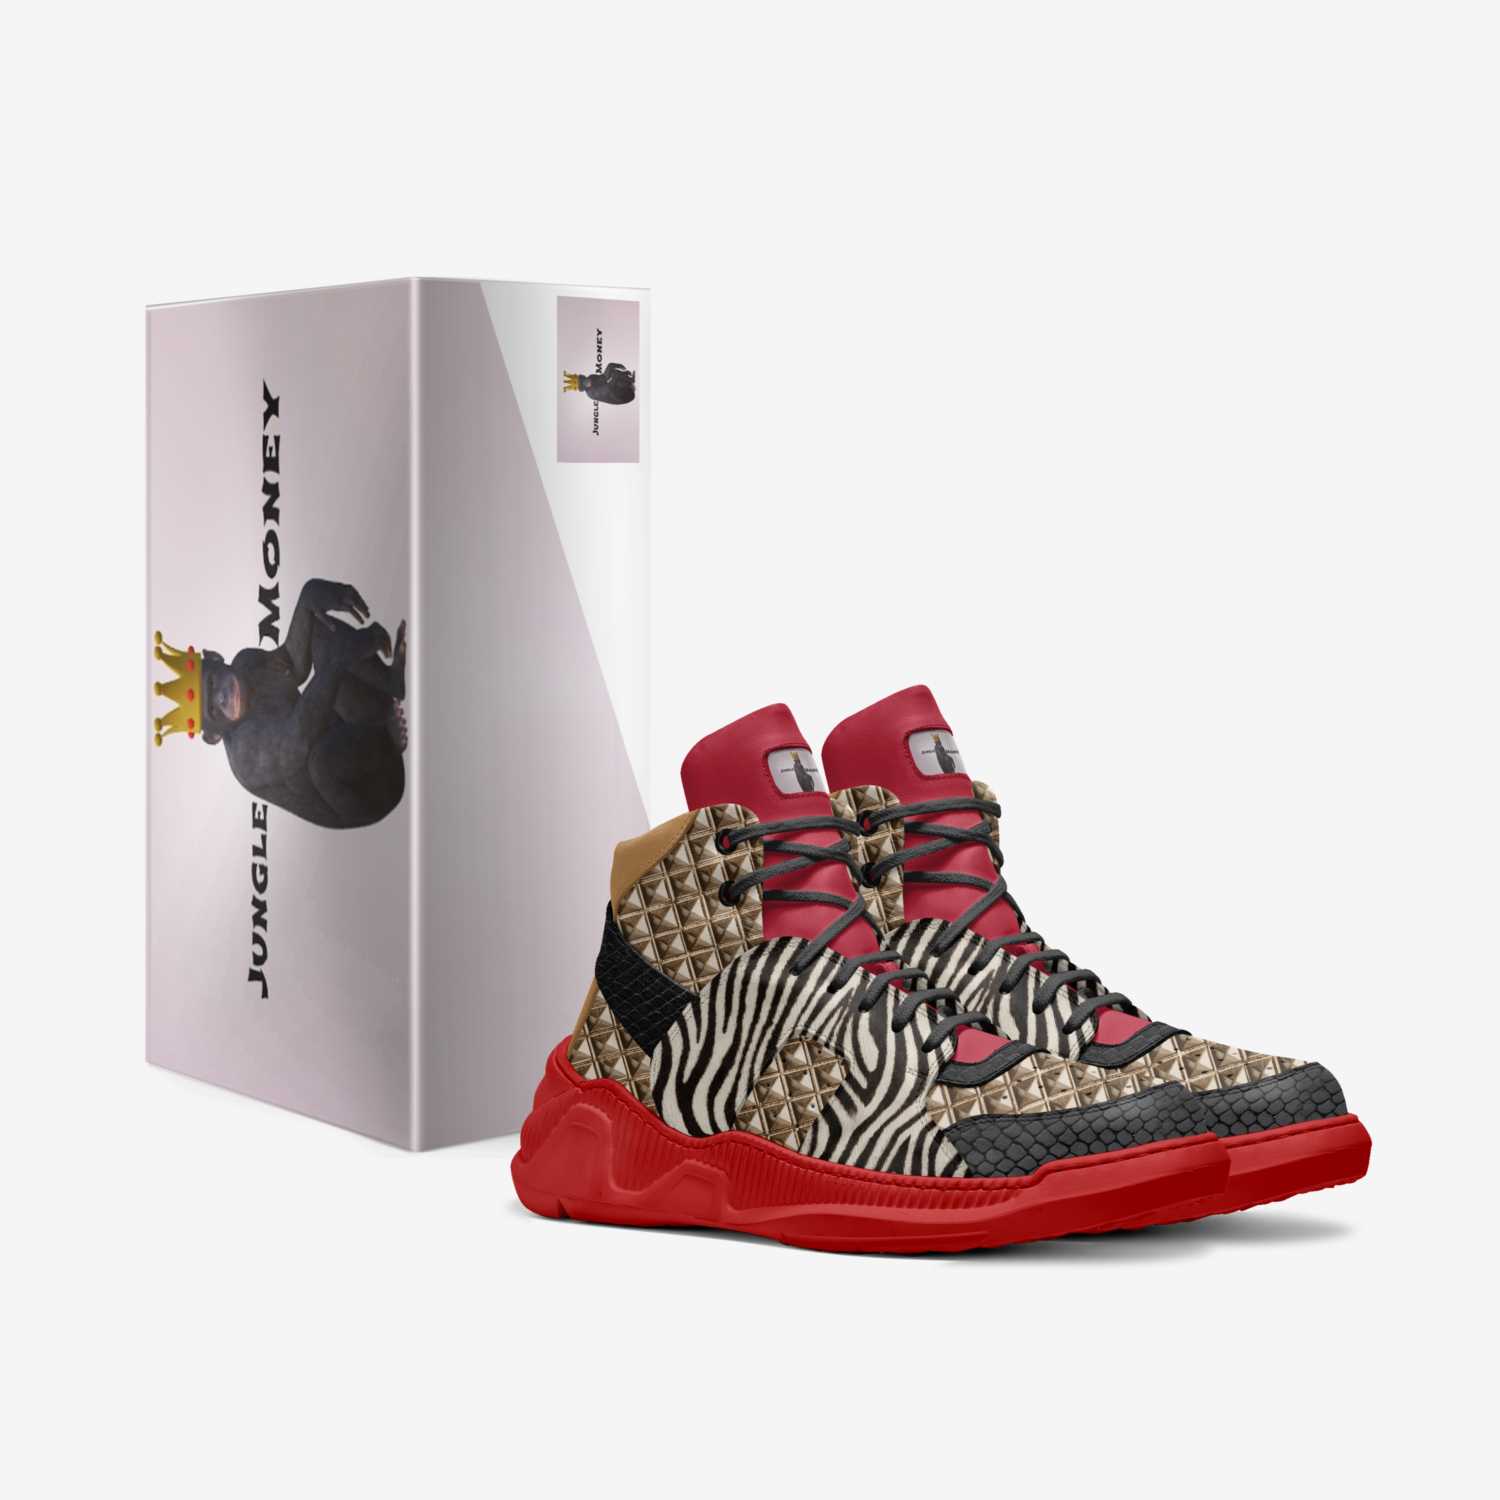 Jungle Money custom made in Italy shoes by Katrina V Banks | Box view